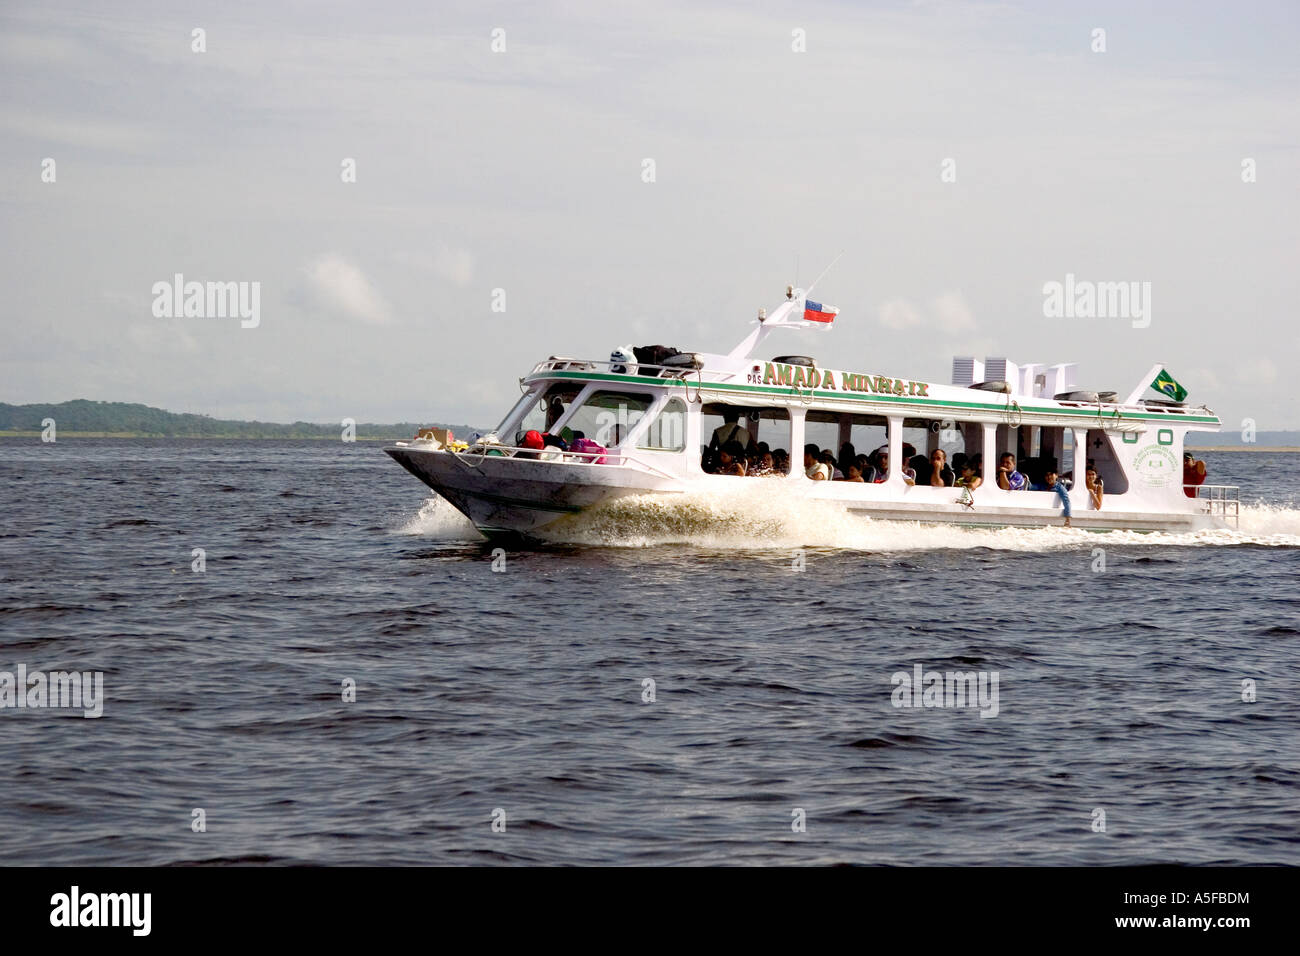 Amazon river ferry boat near Manaus Brazil Stock Photo - Alamy